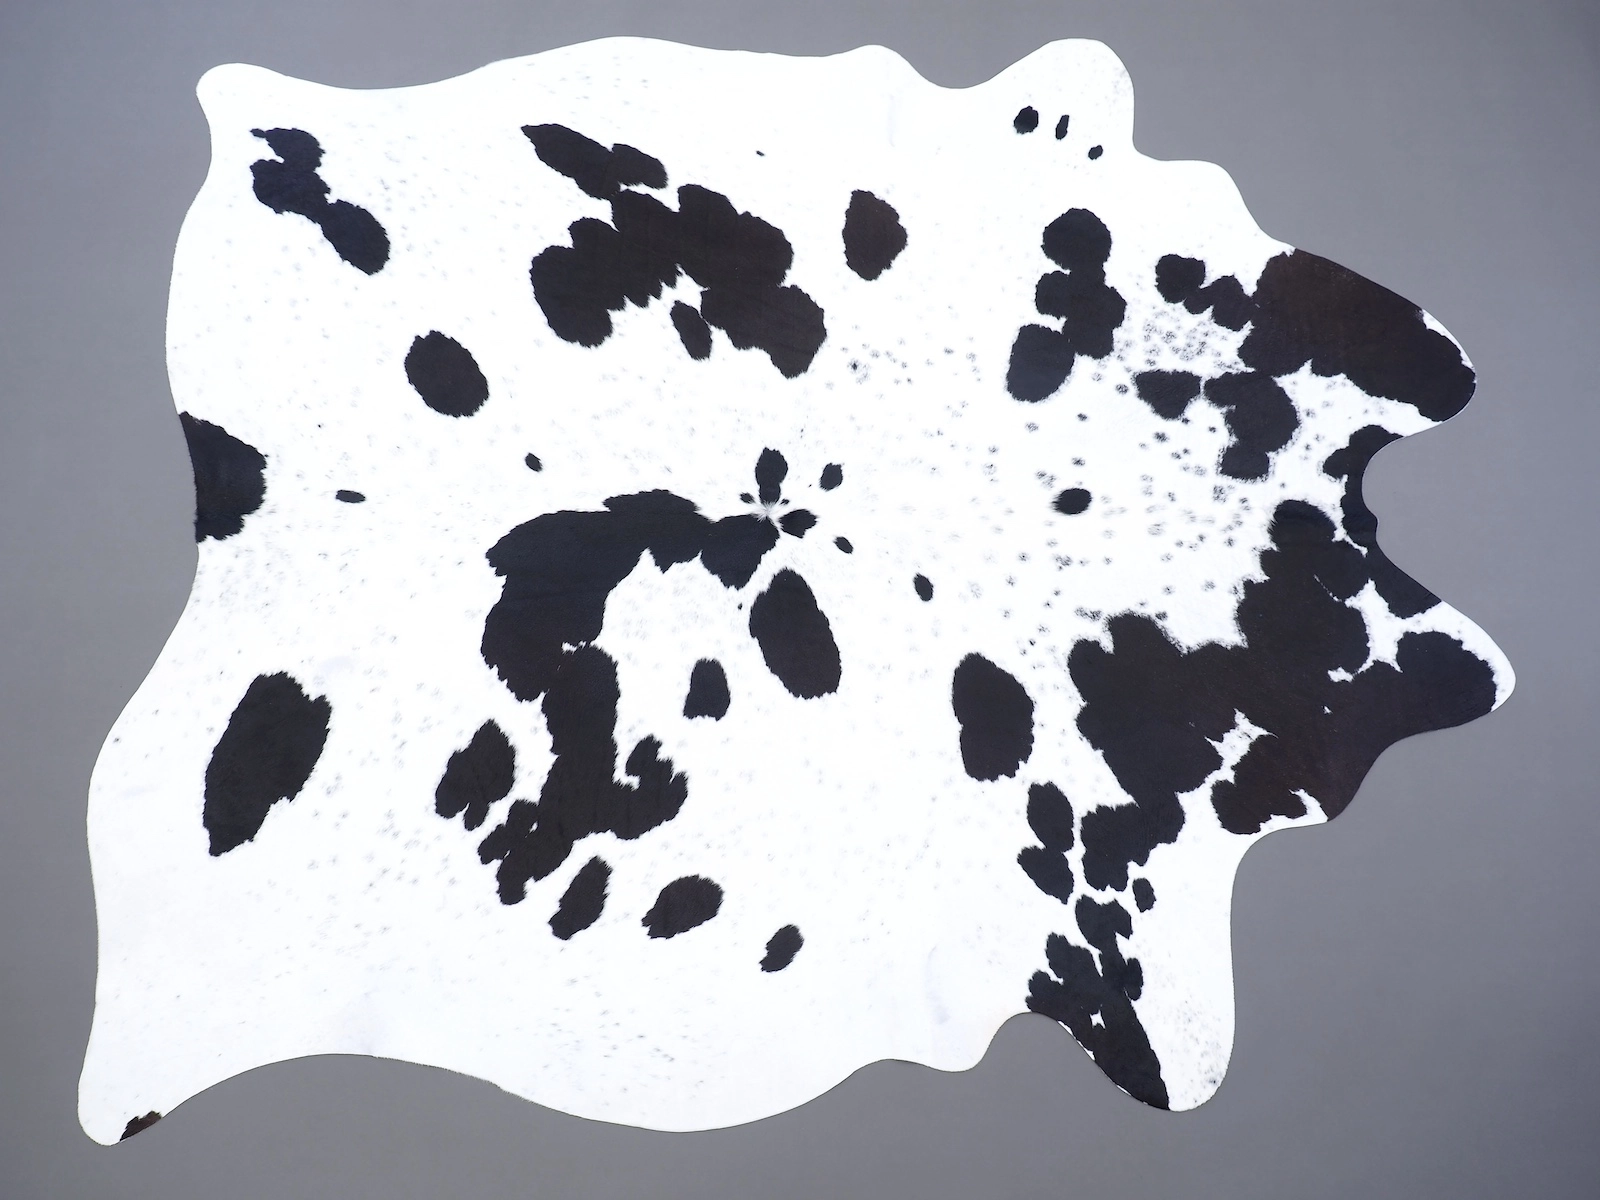 Персонализированный выбор: пятнистая черно-белая шкура коровы (1,86 х 2,33) - Cowhide